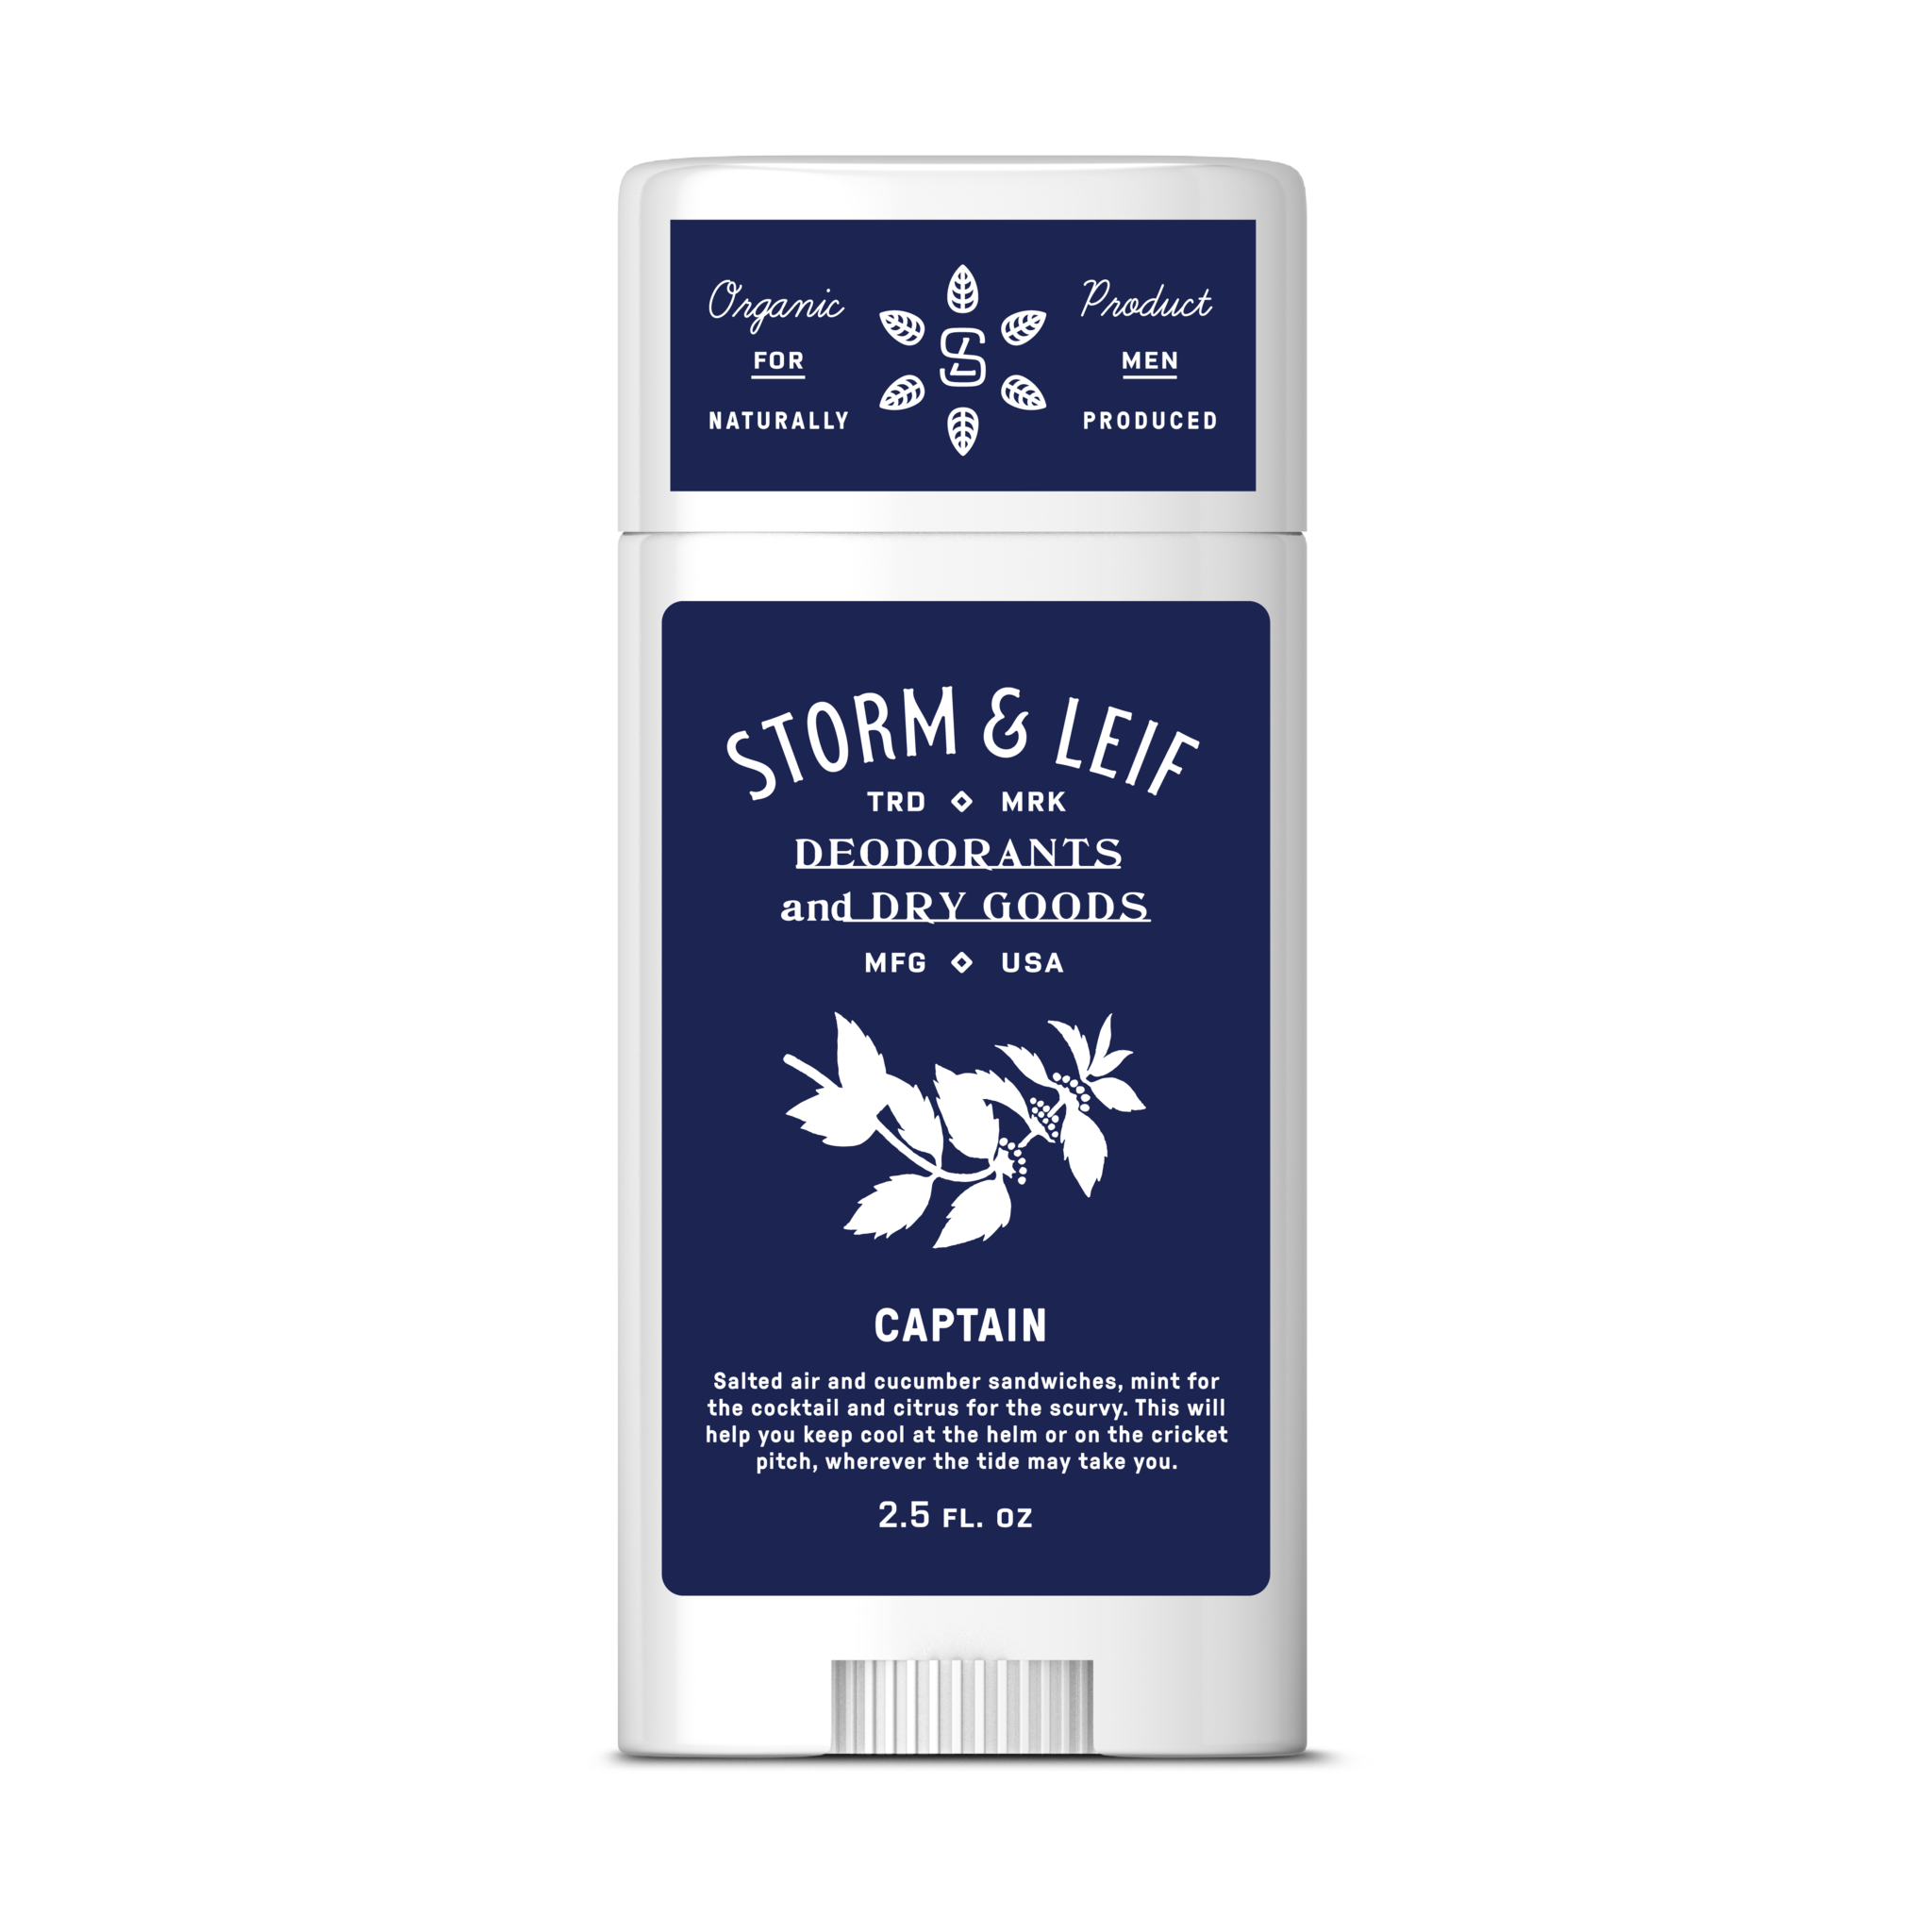 Captain all natural deodorant for men. Aluminum free and USDA organic certified